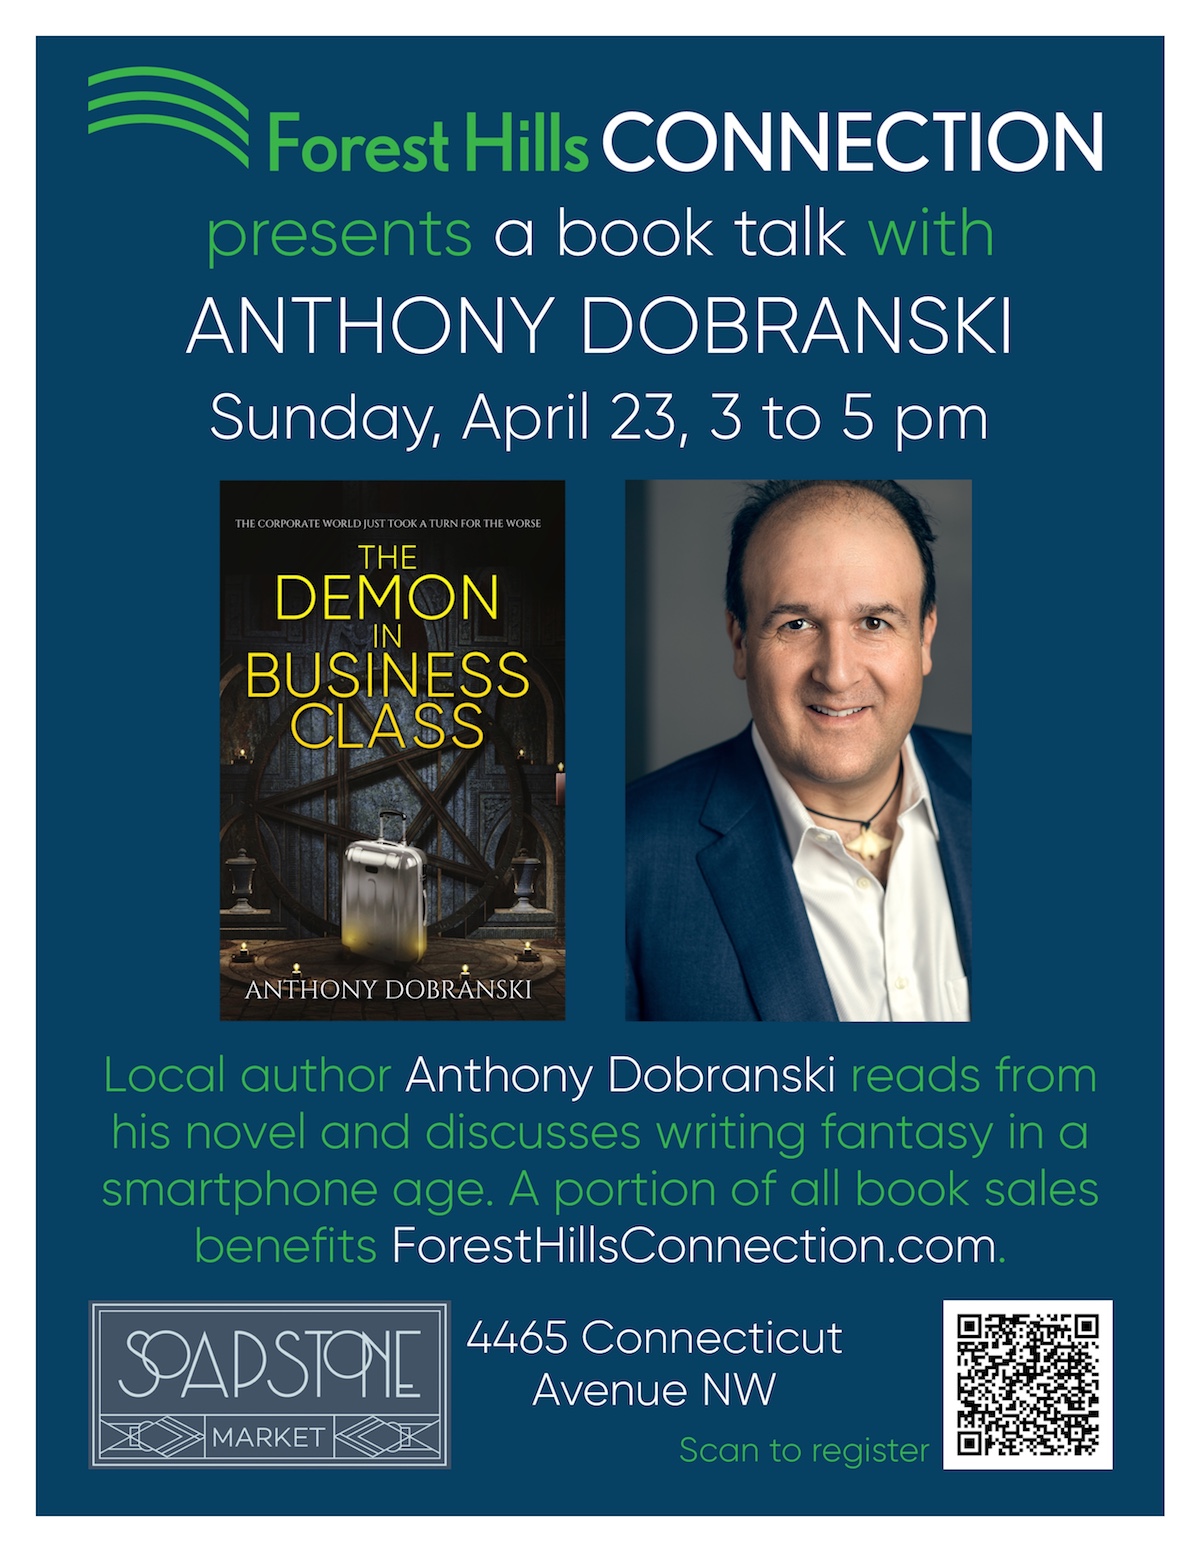 Anthony Dobranski at Soapstone Market, 4465 Connecticut Ave NW, Sun April 23 3-5pm